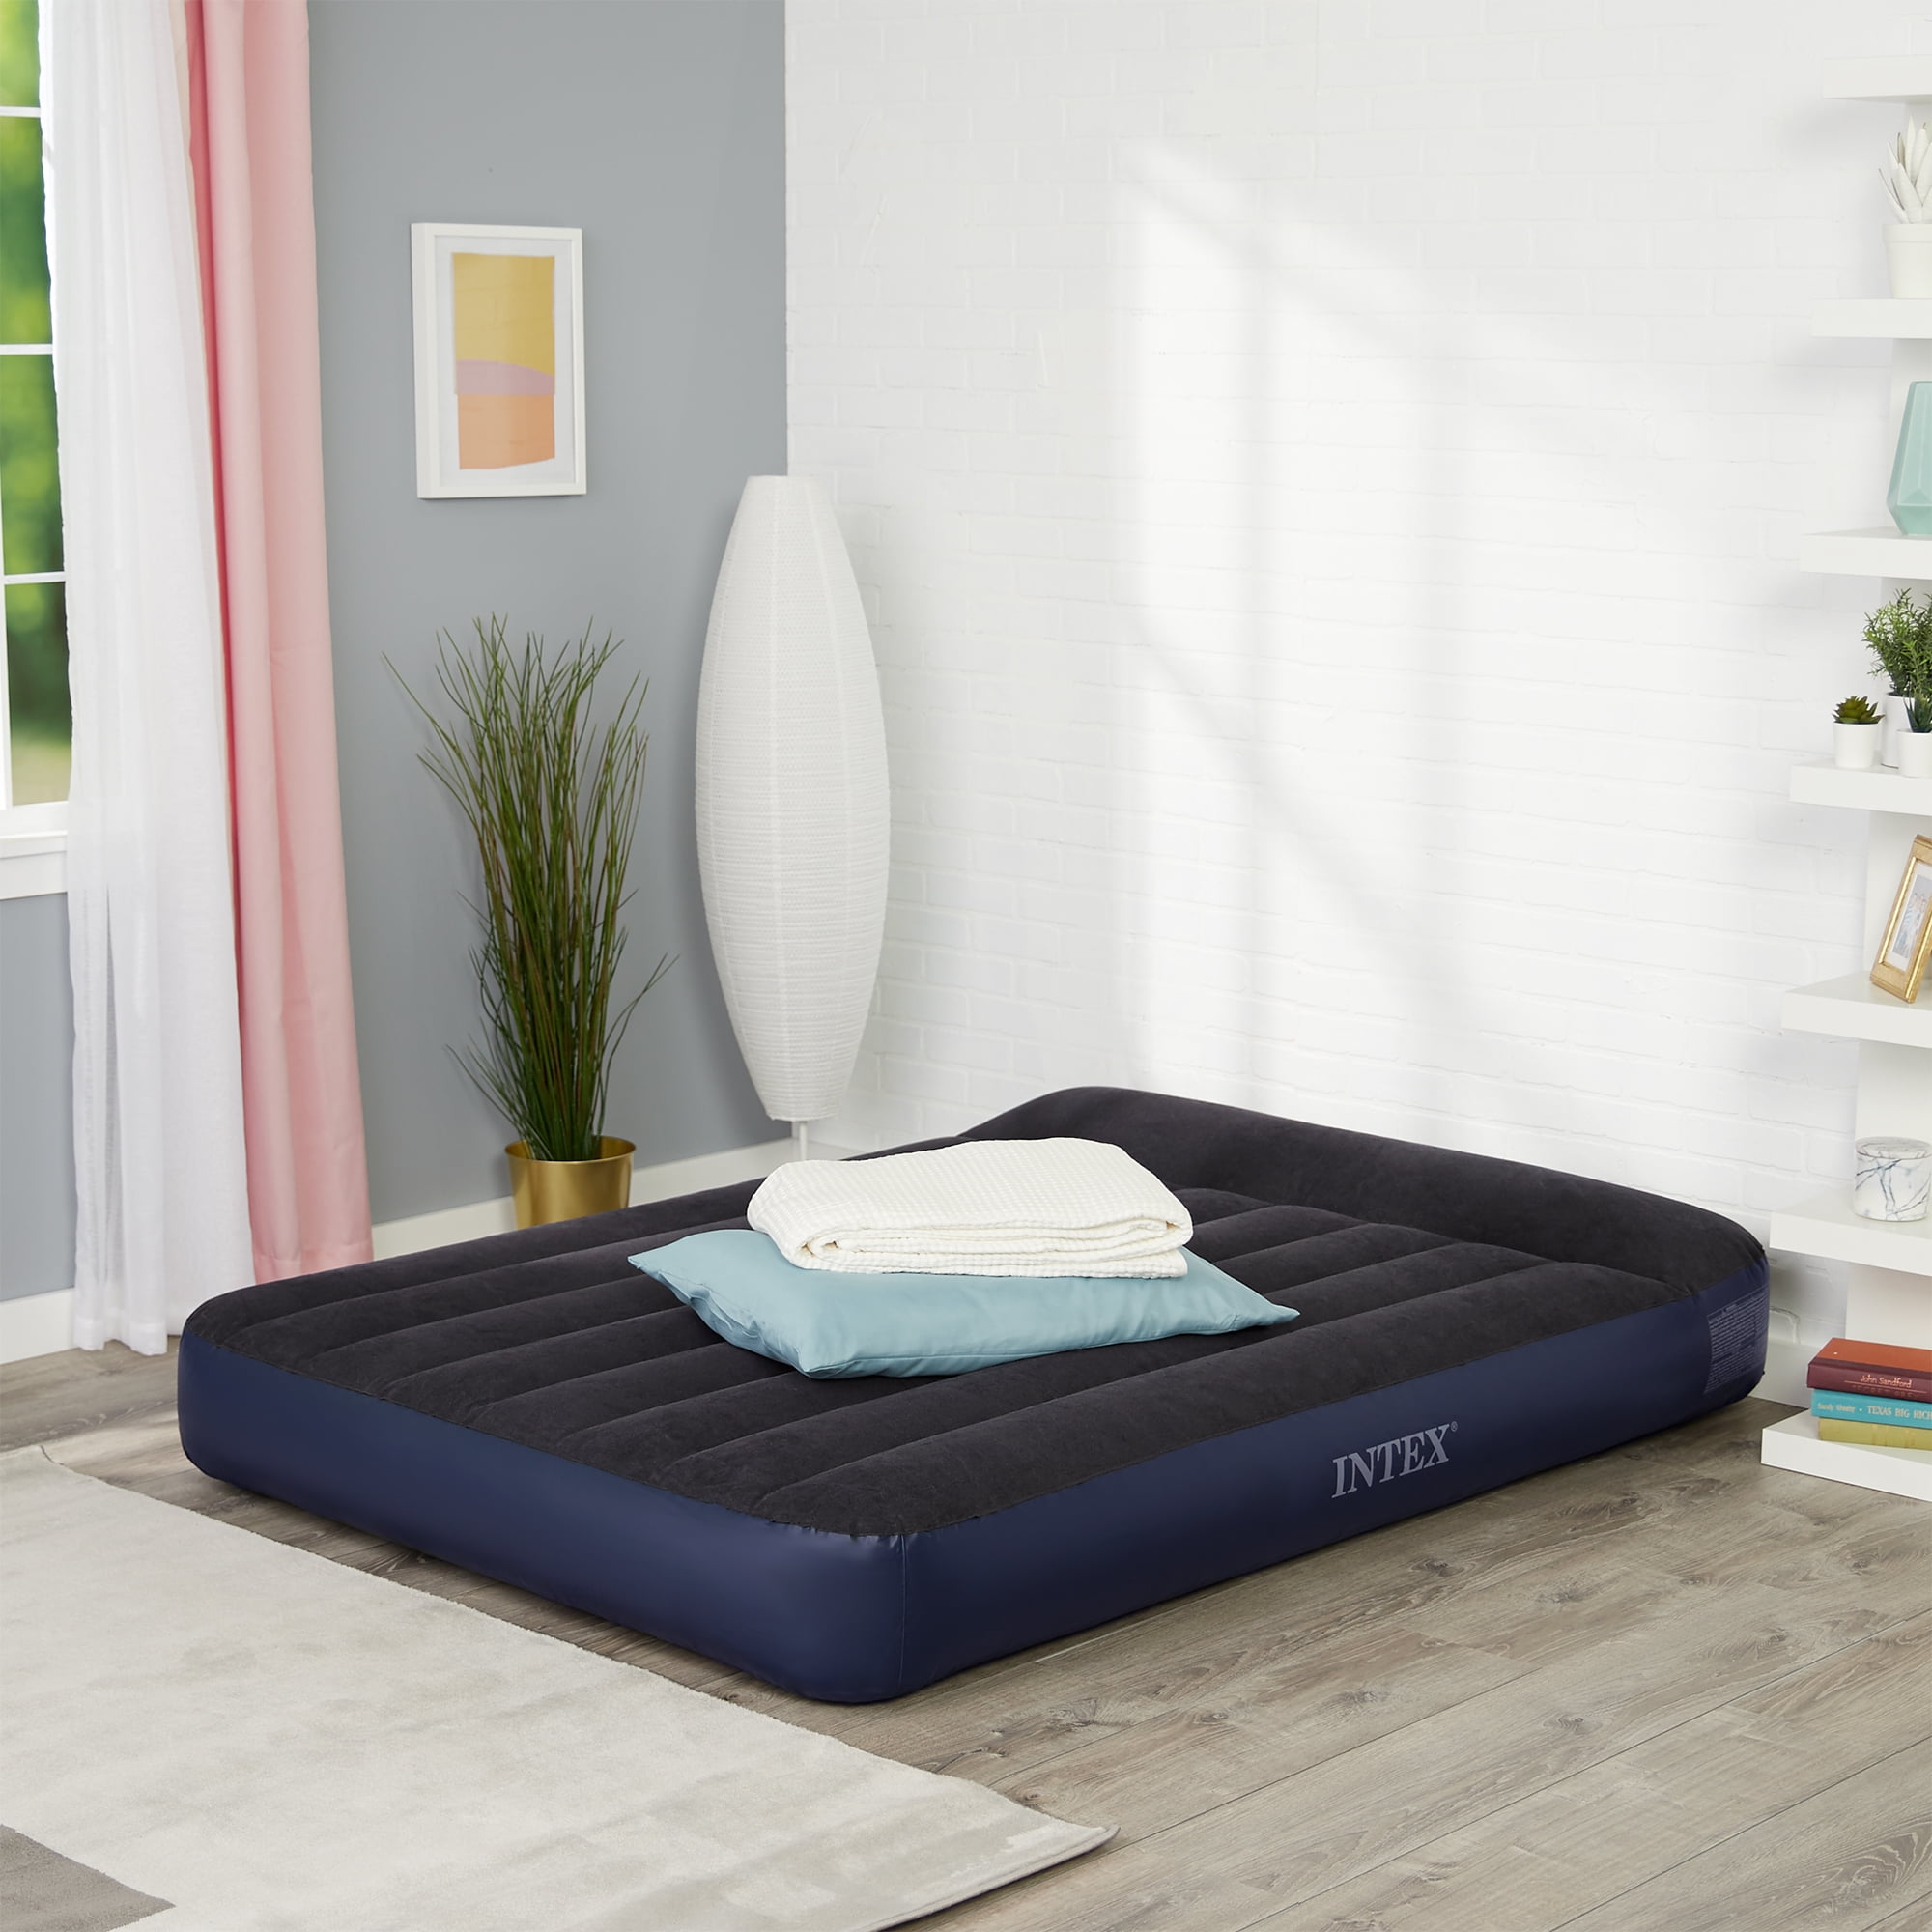 Intex Queen Dura-Beam Deluxe Comfort Pillow Rest Airbed with Internal Pump  - Sam's Club